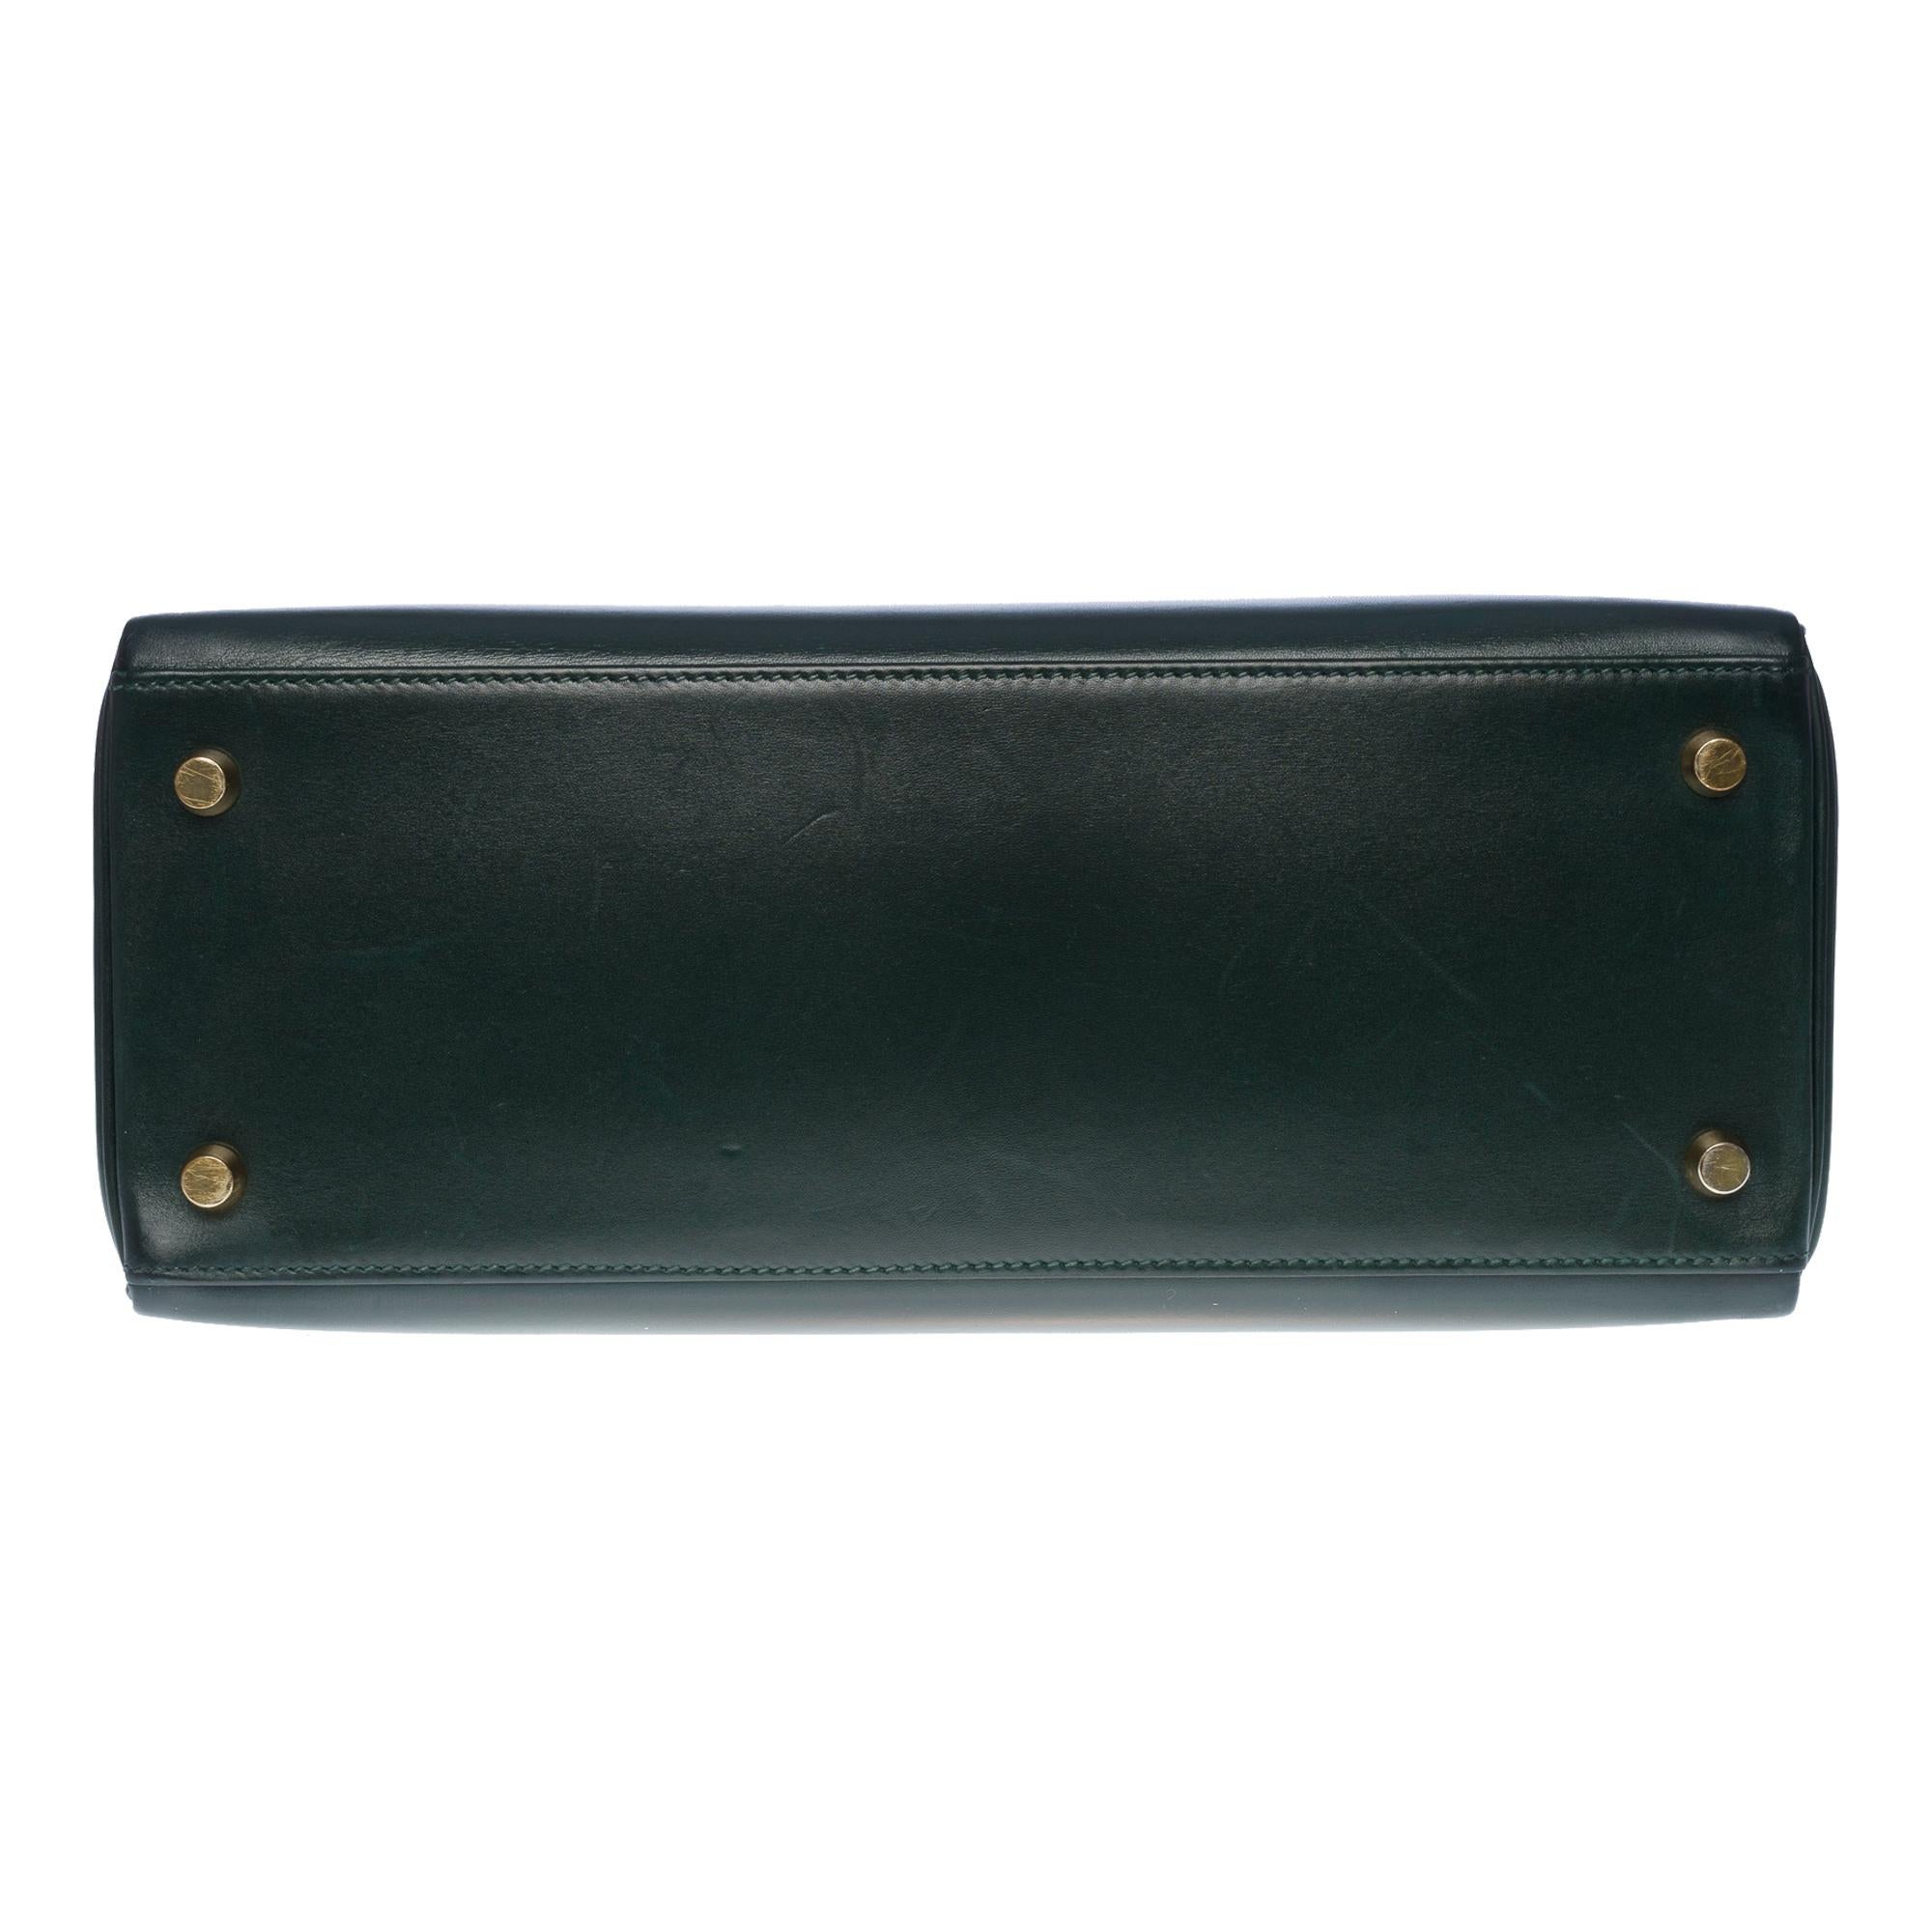 Rare Hermès Kelly 28 retourne handbag strap in green box calf leather, GHW 5